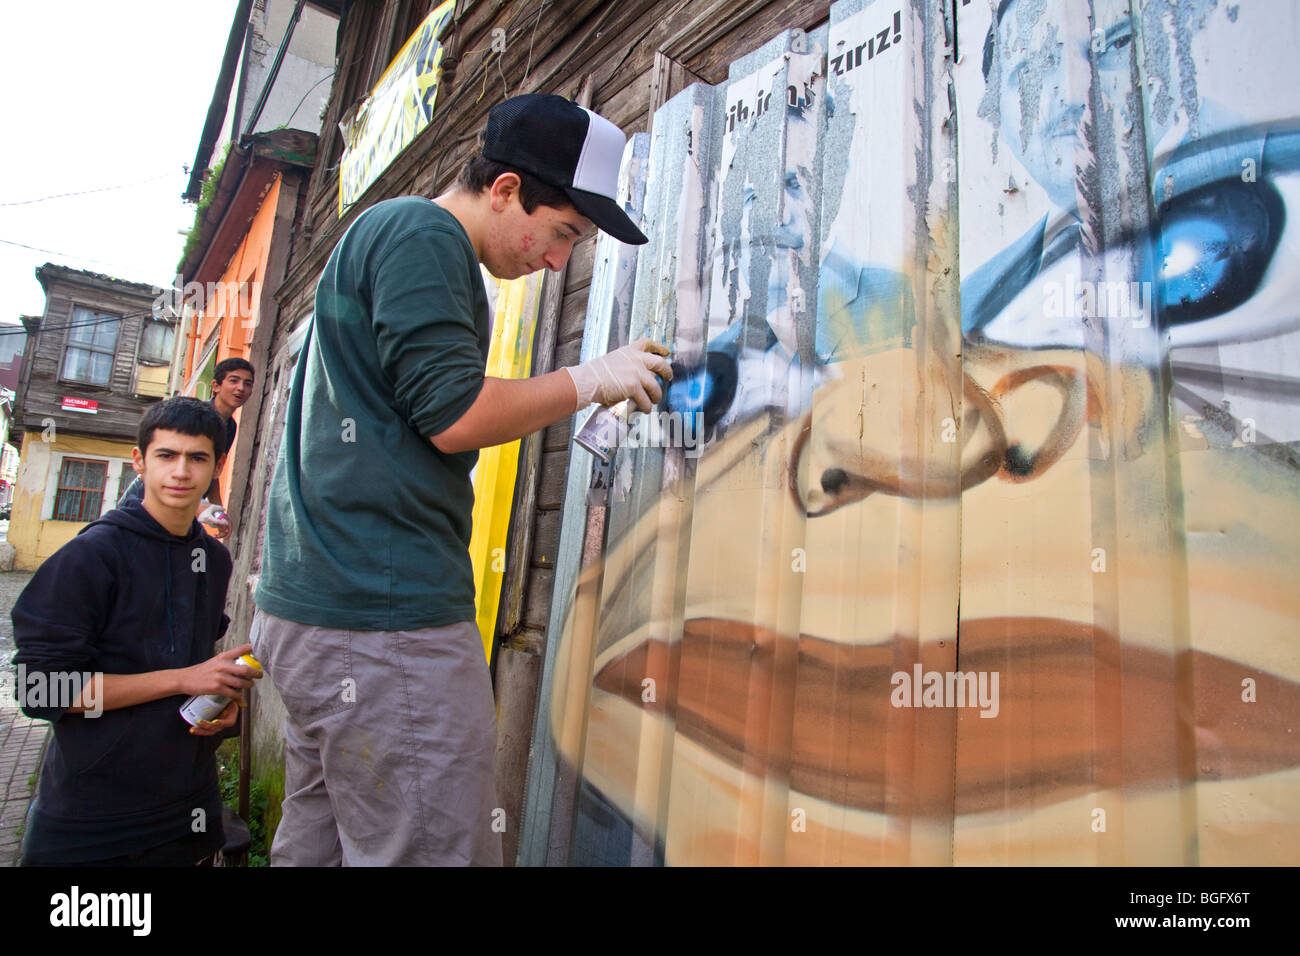 Turkish youth painting graffiti on an old wooden Ottoman house, Istanbul Turkey Stock Photo